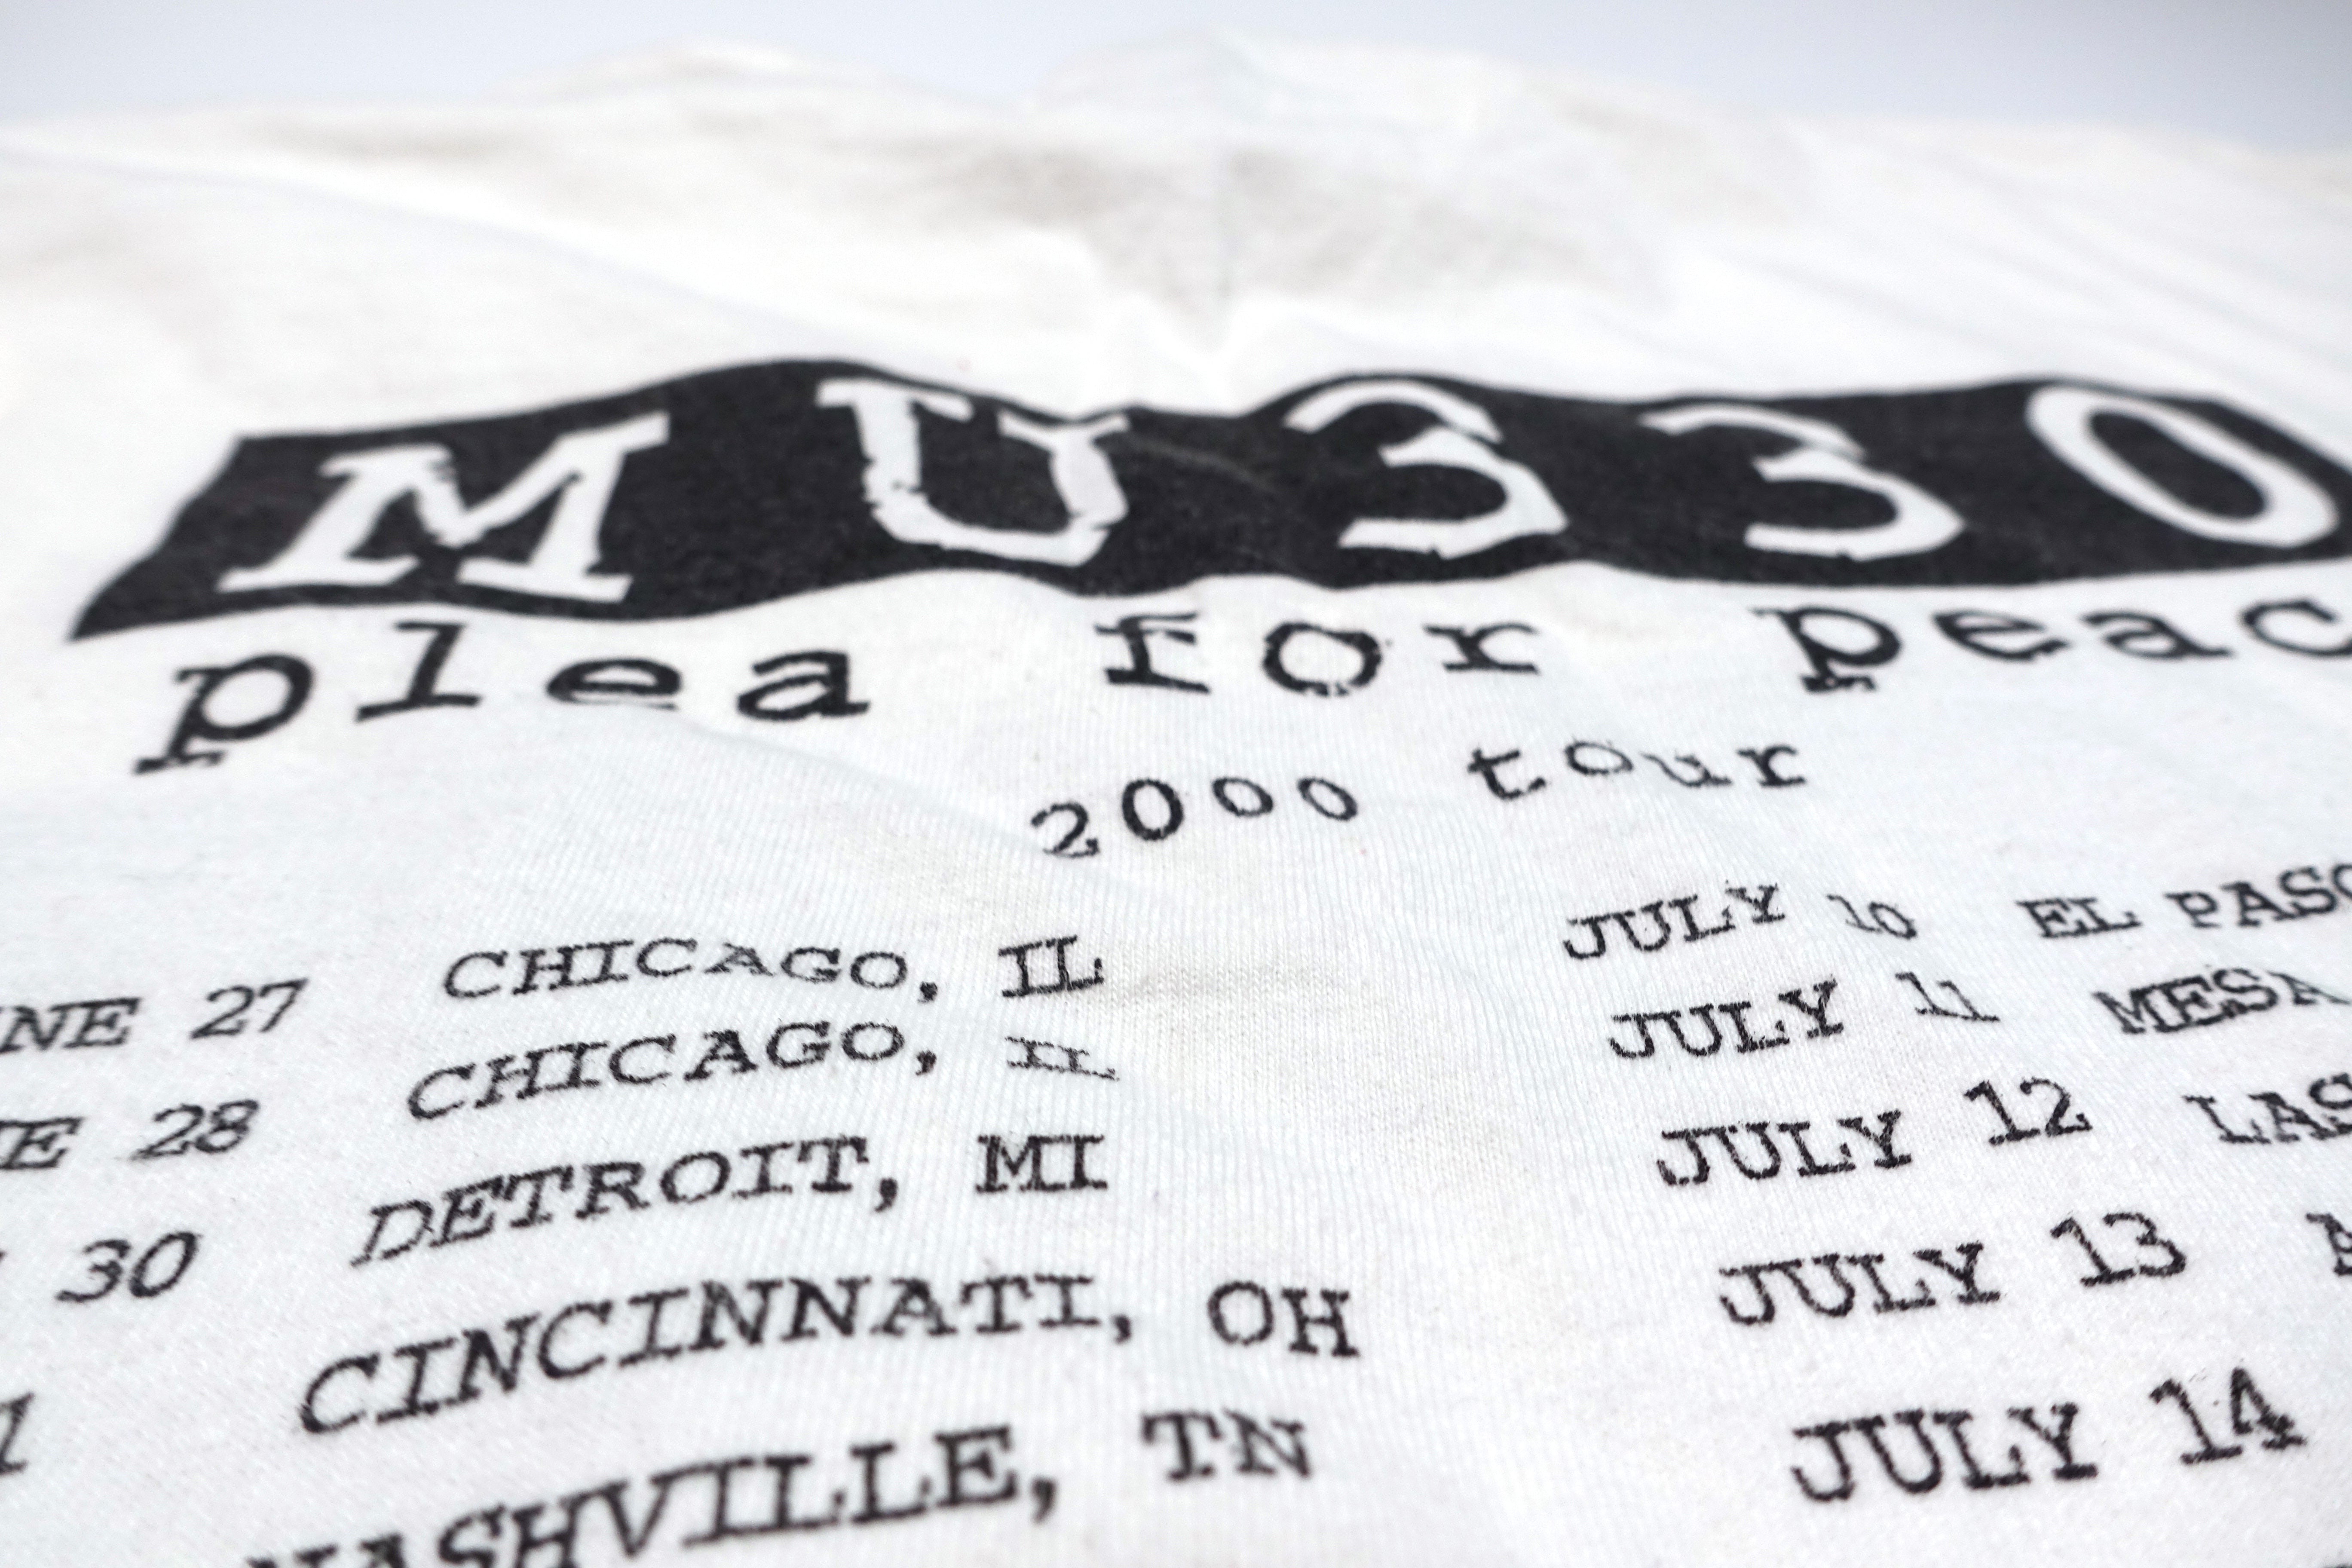 MU330 – Plea For Peace 2000 Tour Shirt Size Large